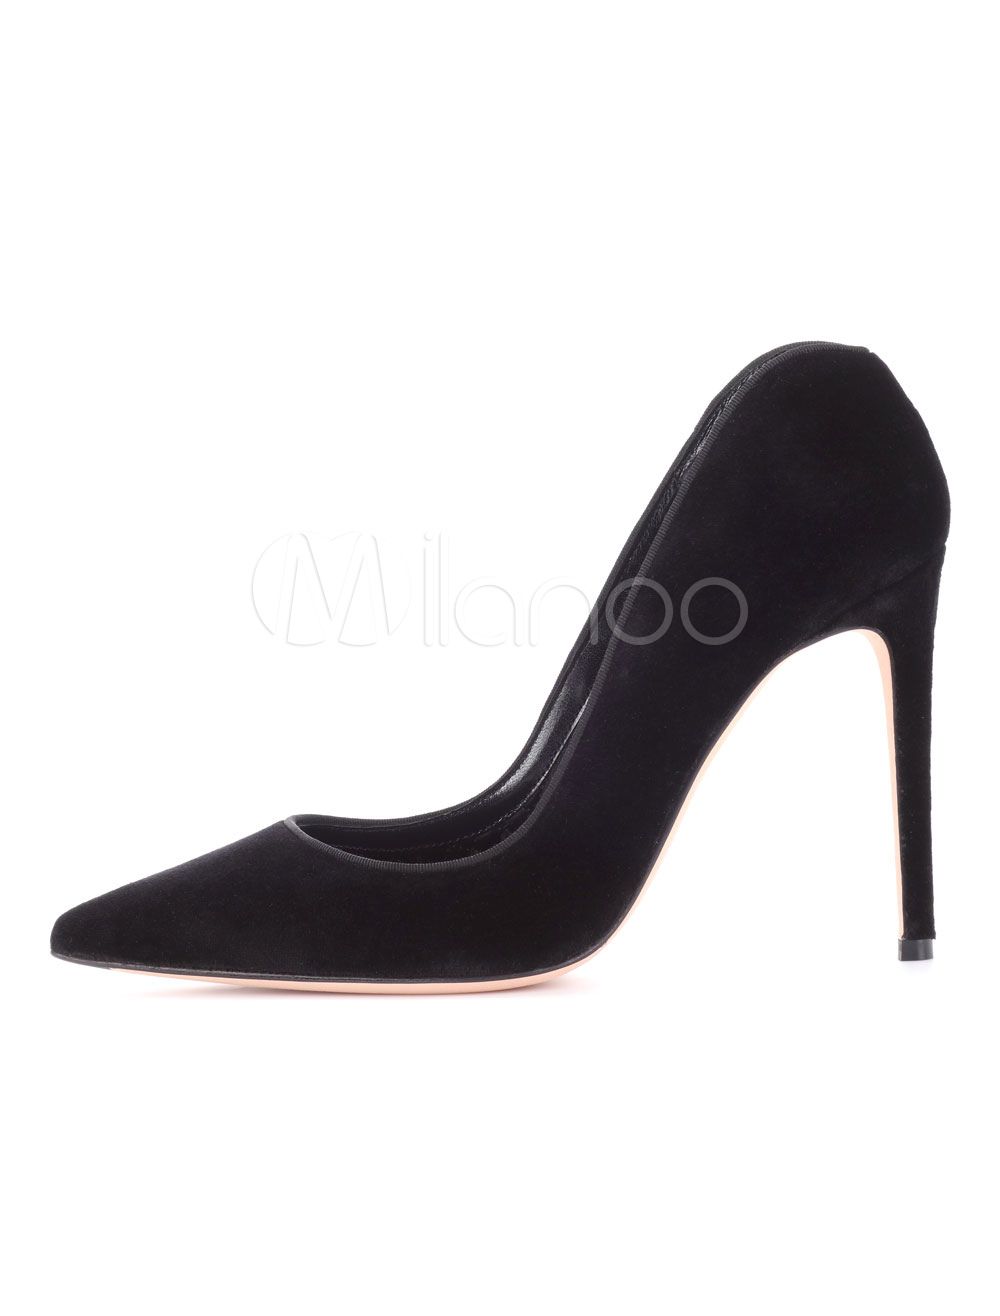 Black High Heels Women's Pointed Toe PU Leather Slip On Pumps | Milanoo